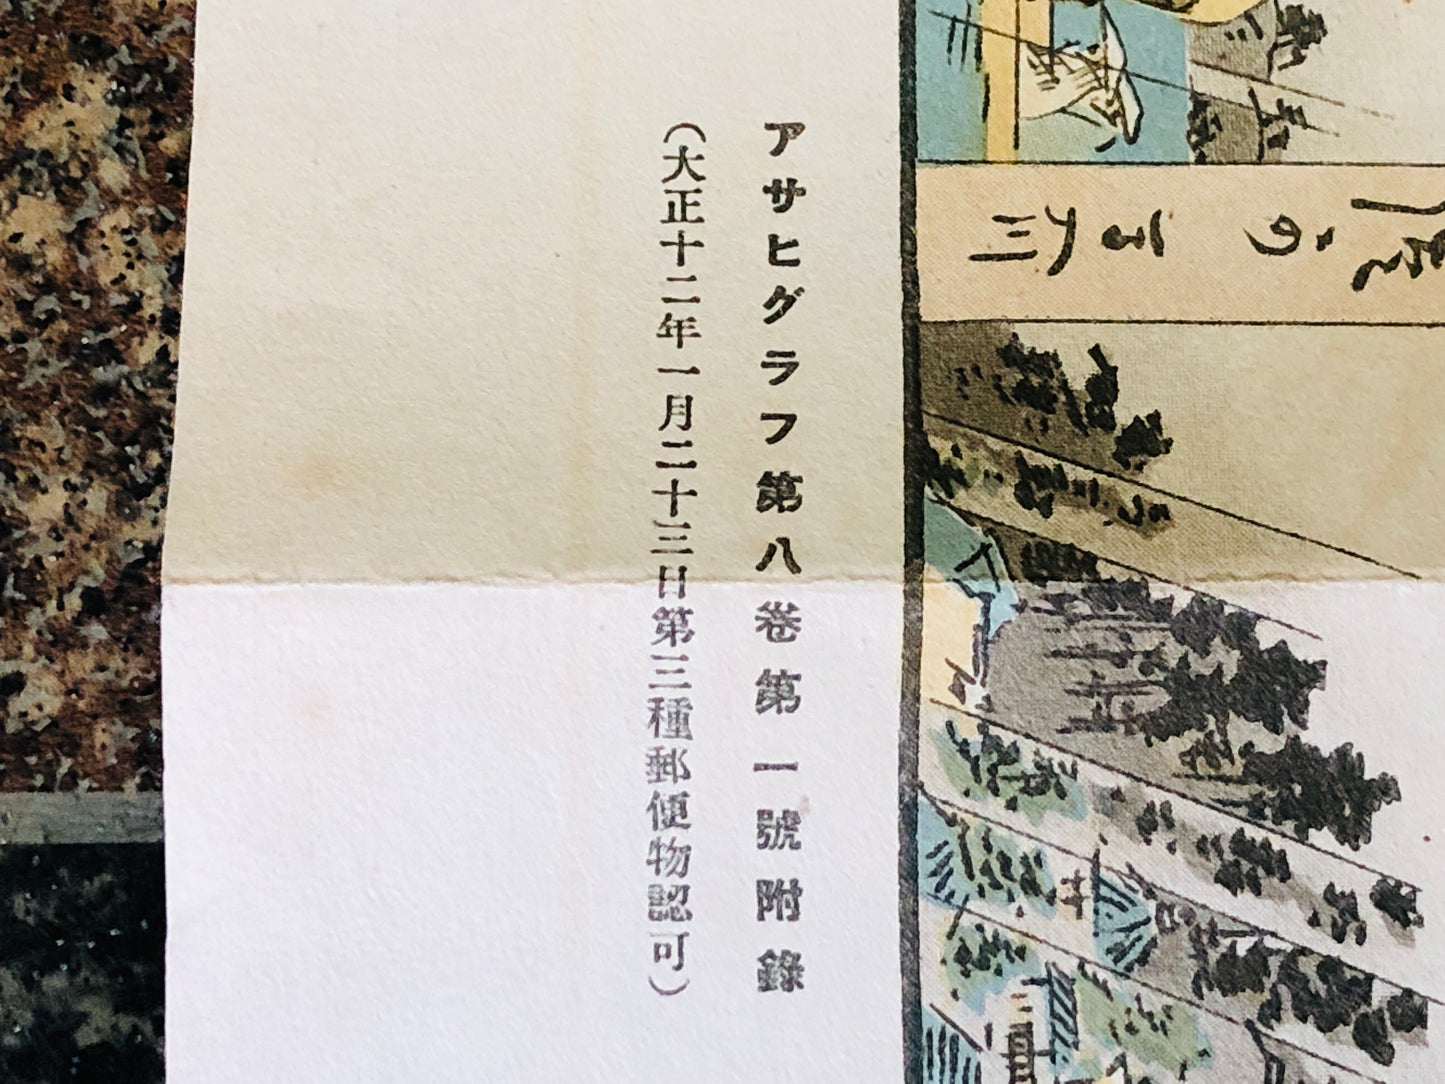 Y5282 SUGOROKU Hiroshige Utagawa Tokaido board game paper Japan antique vintage